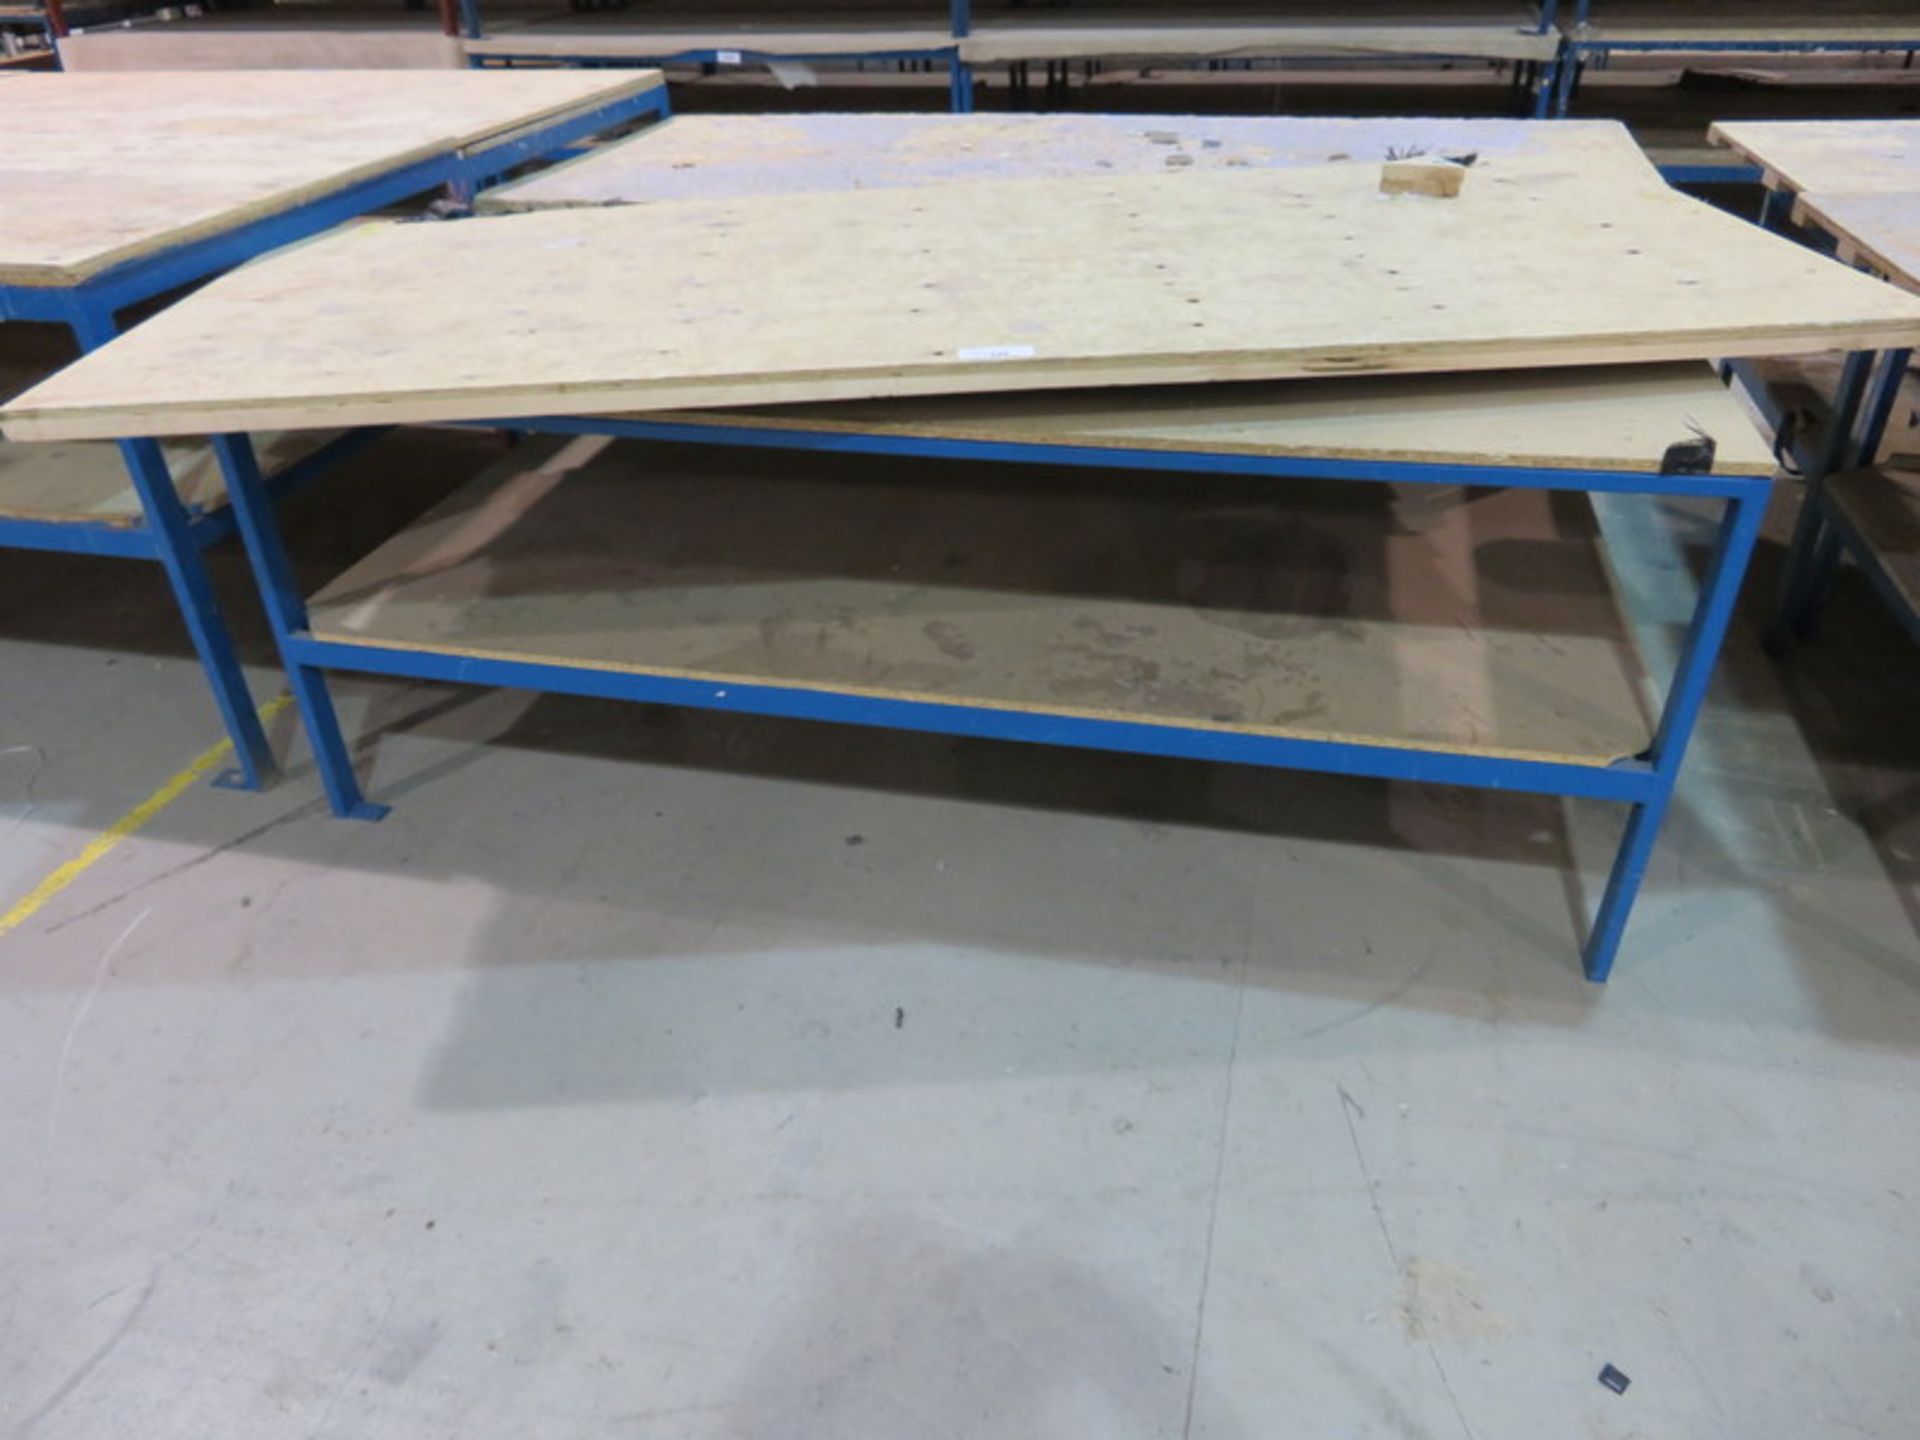 Metal frame wooden top swivel work bench - 2300 x 1000 x 830mm (LxDxH)